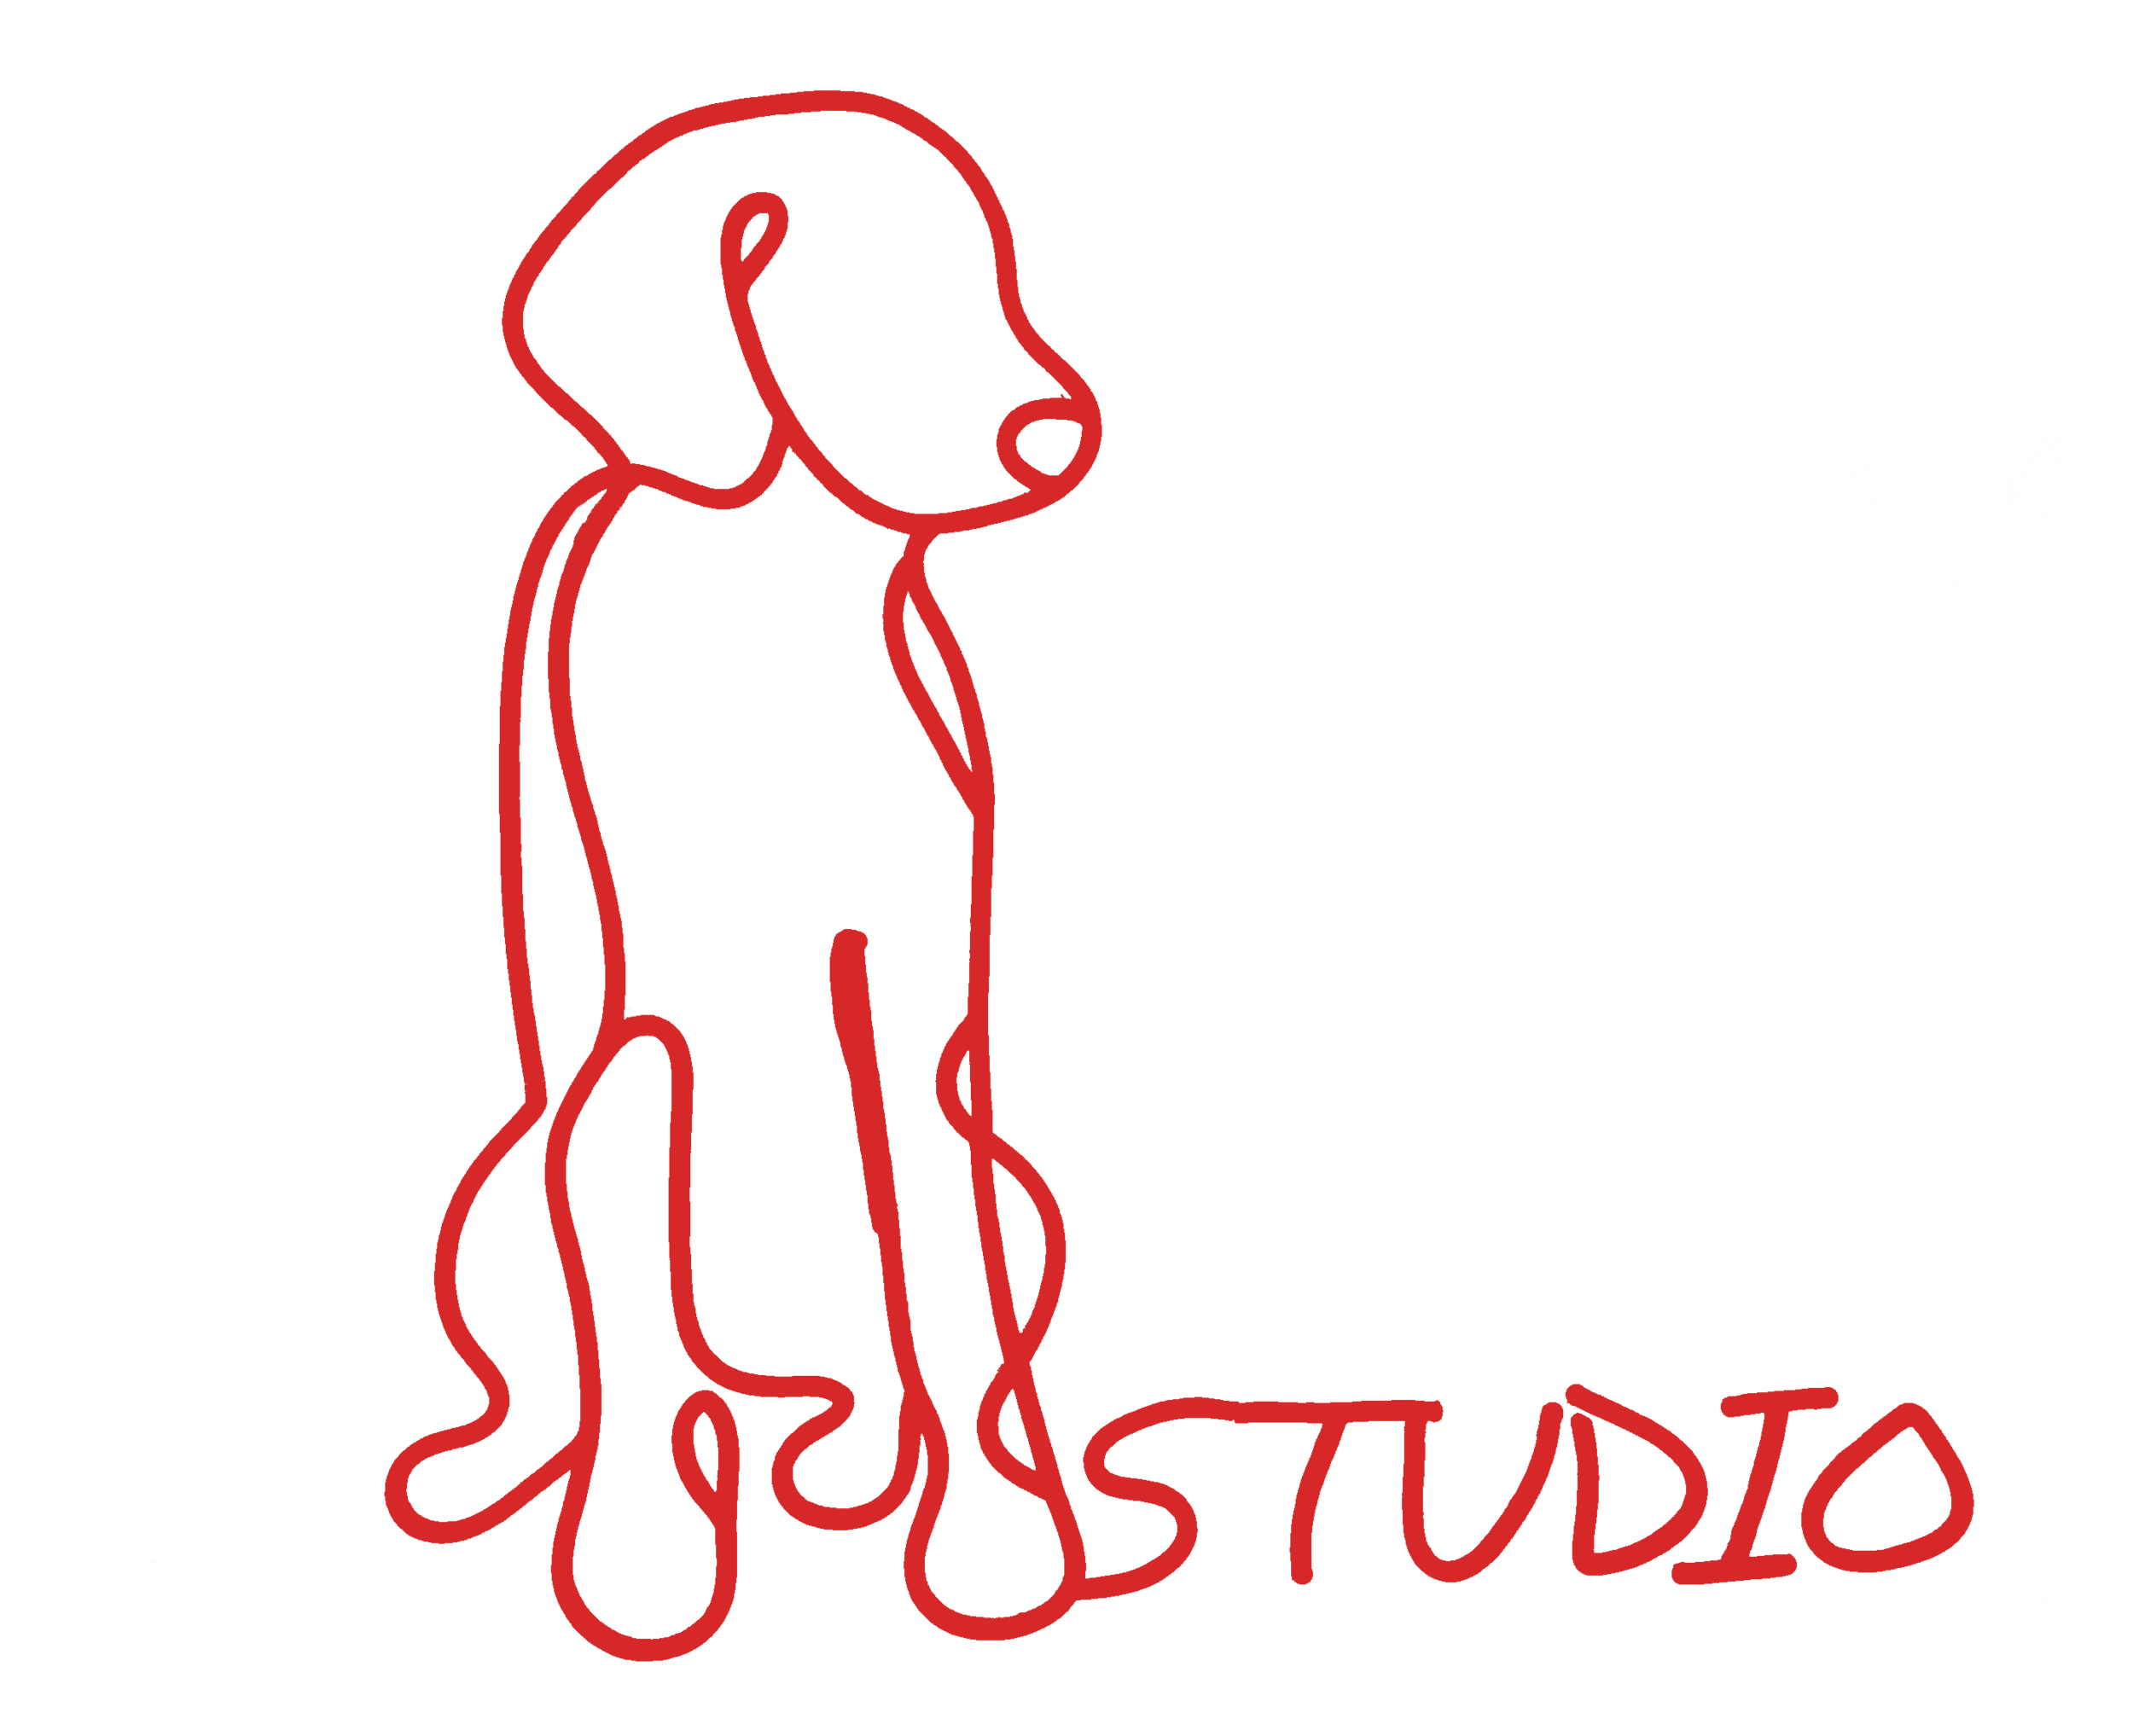 The Red Dog Studio